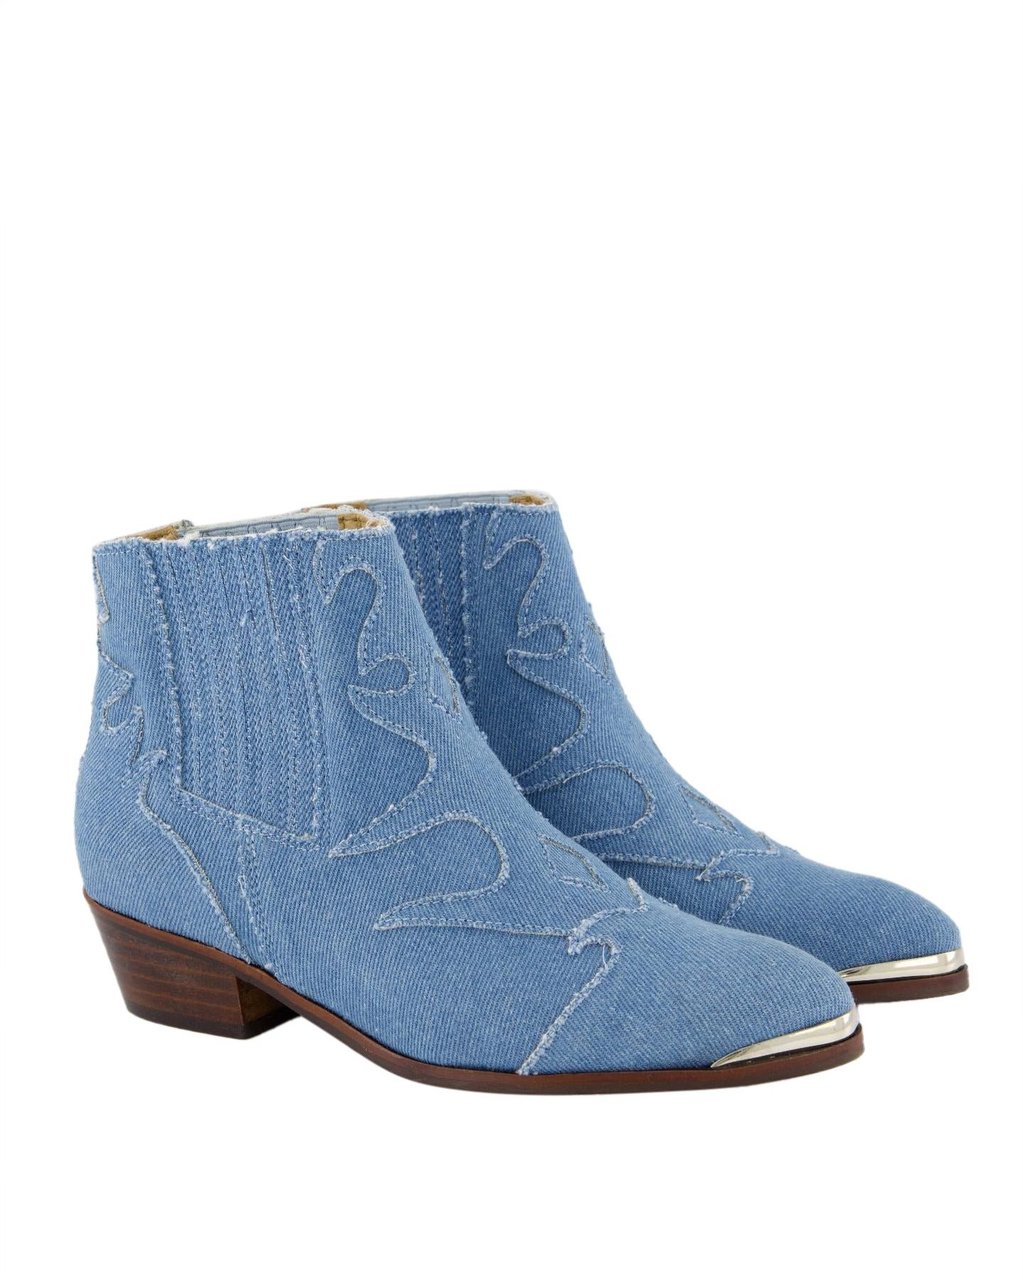 Toral Dames Sonia Boot Blauw/Jeans Blauw